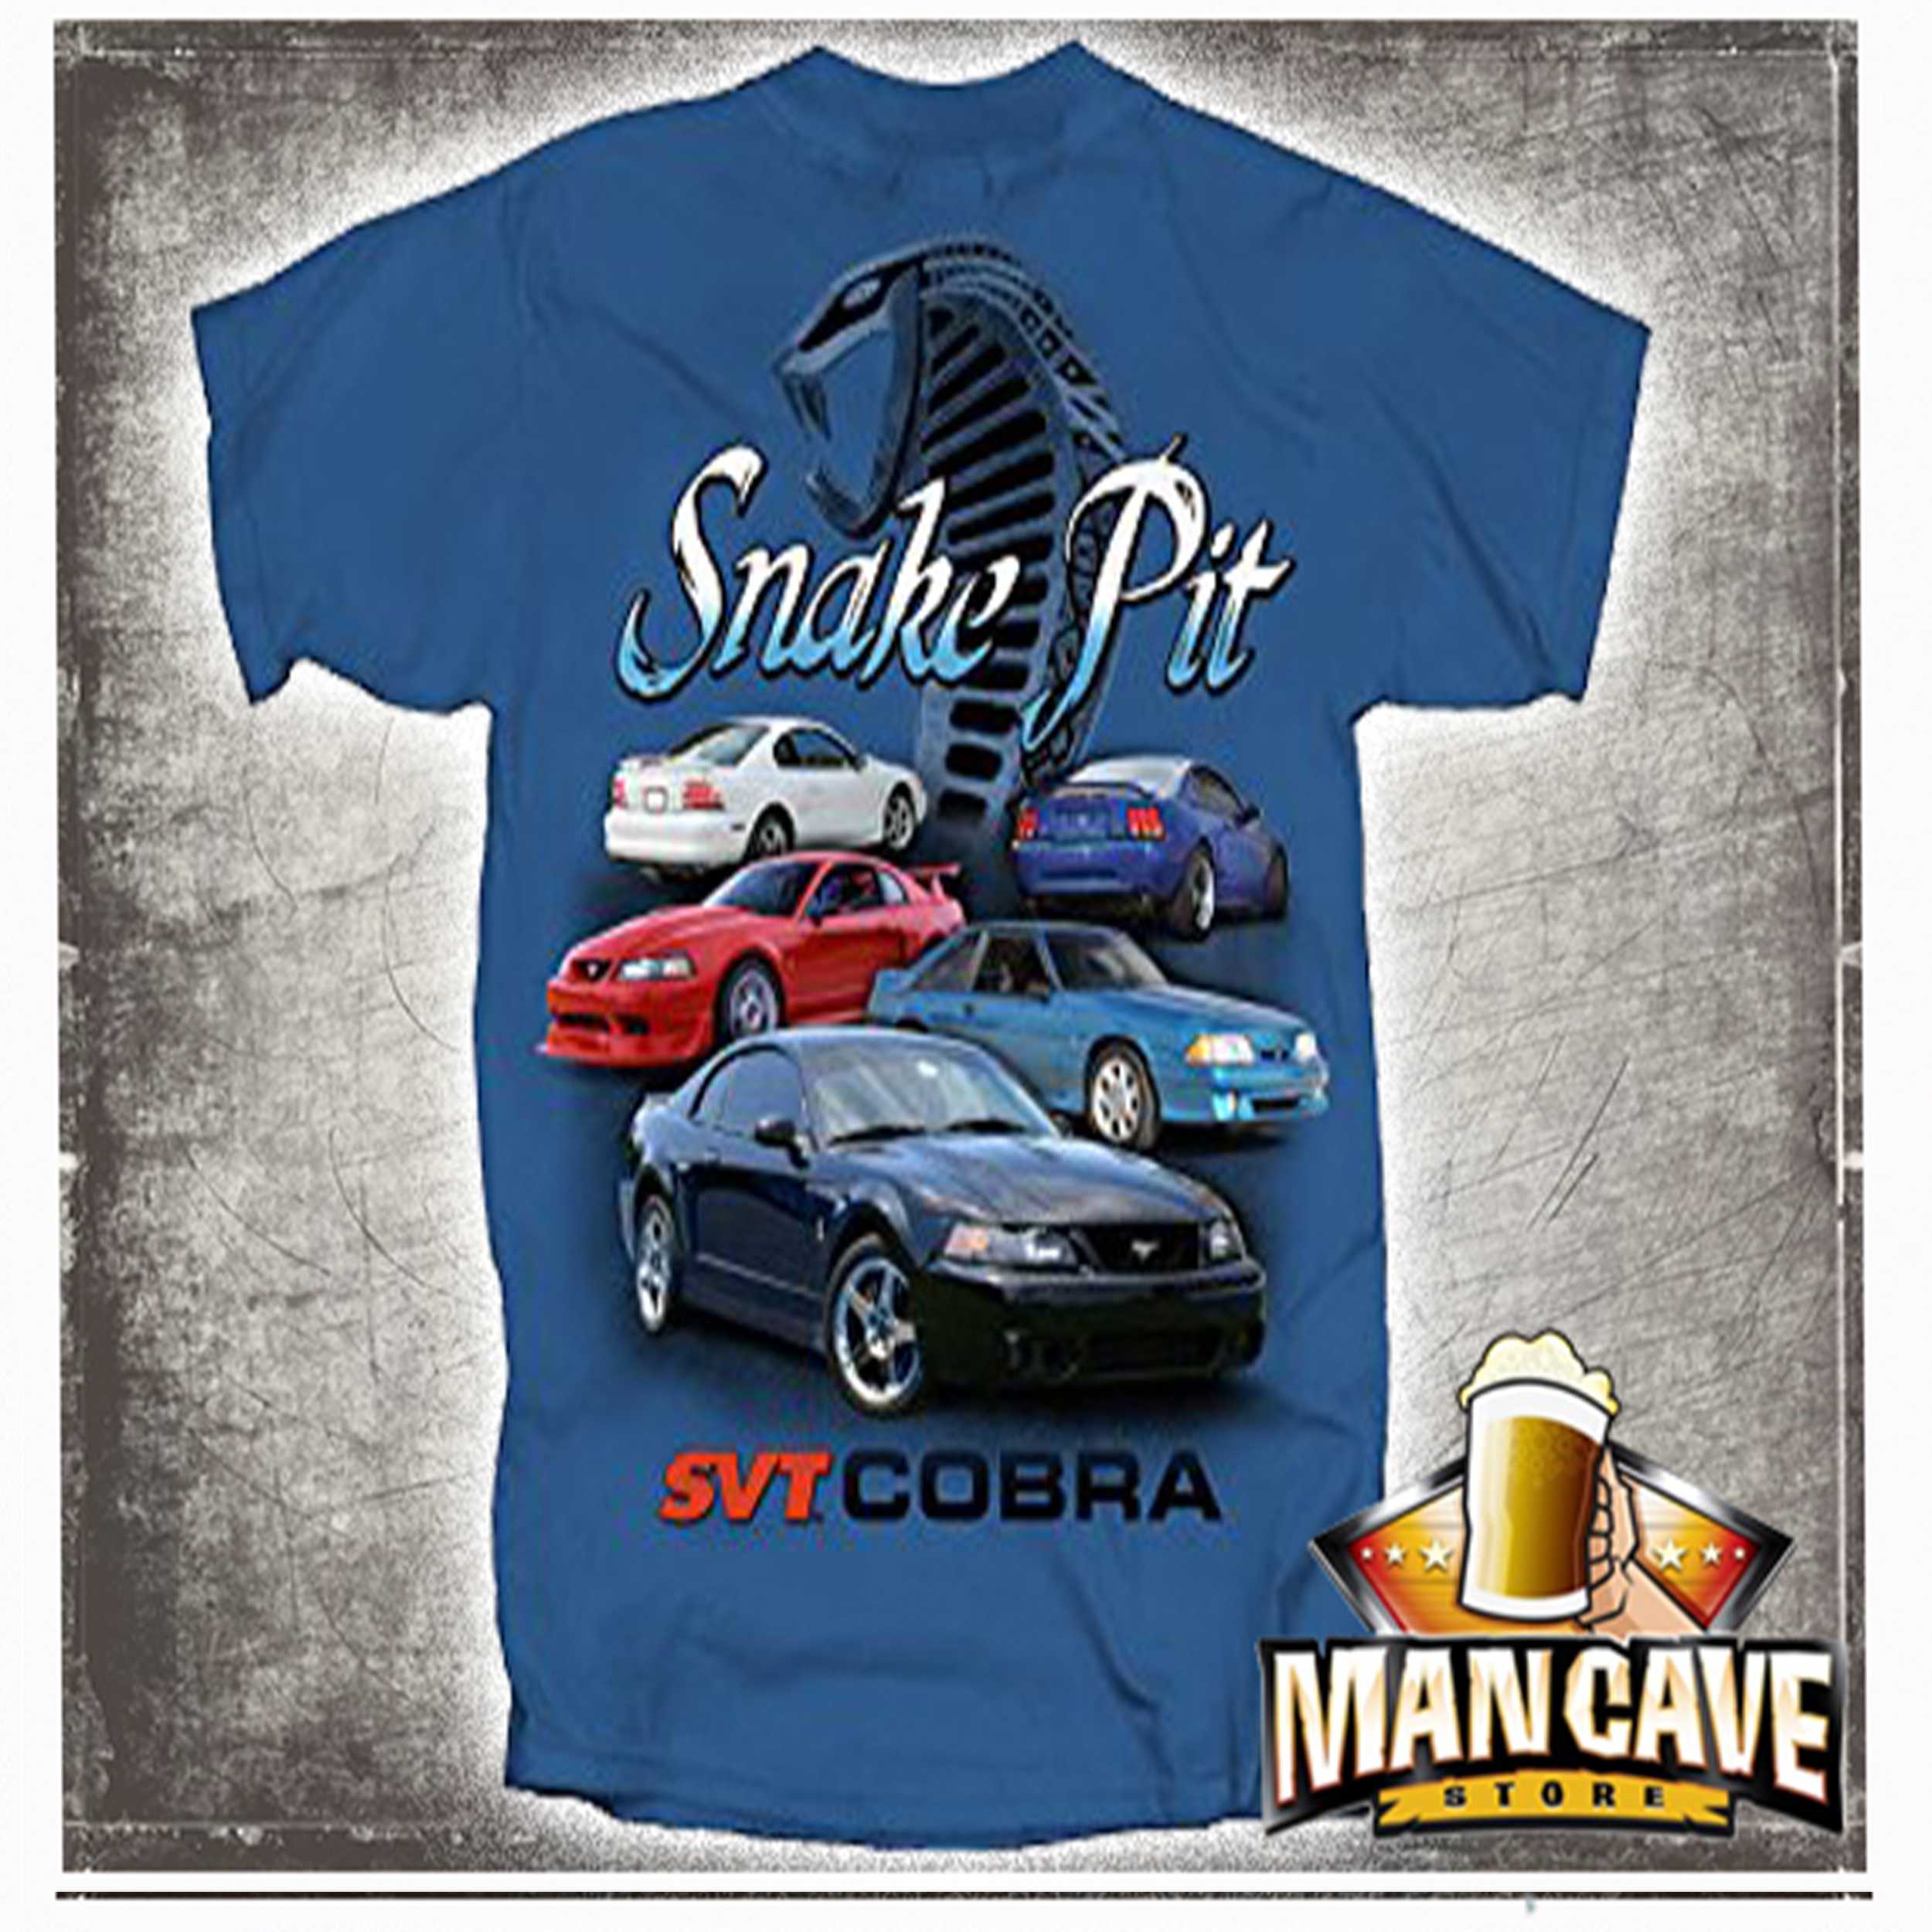 Cobra Snake Pit on Blue T-shirt